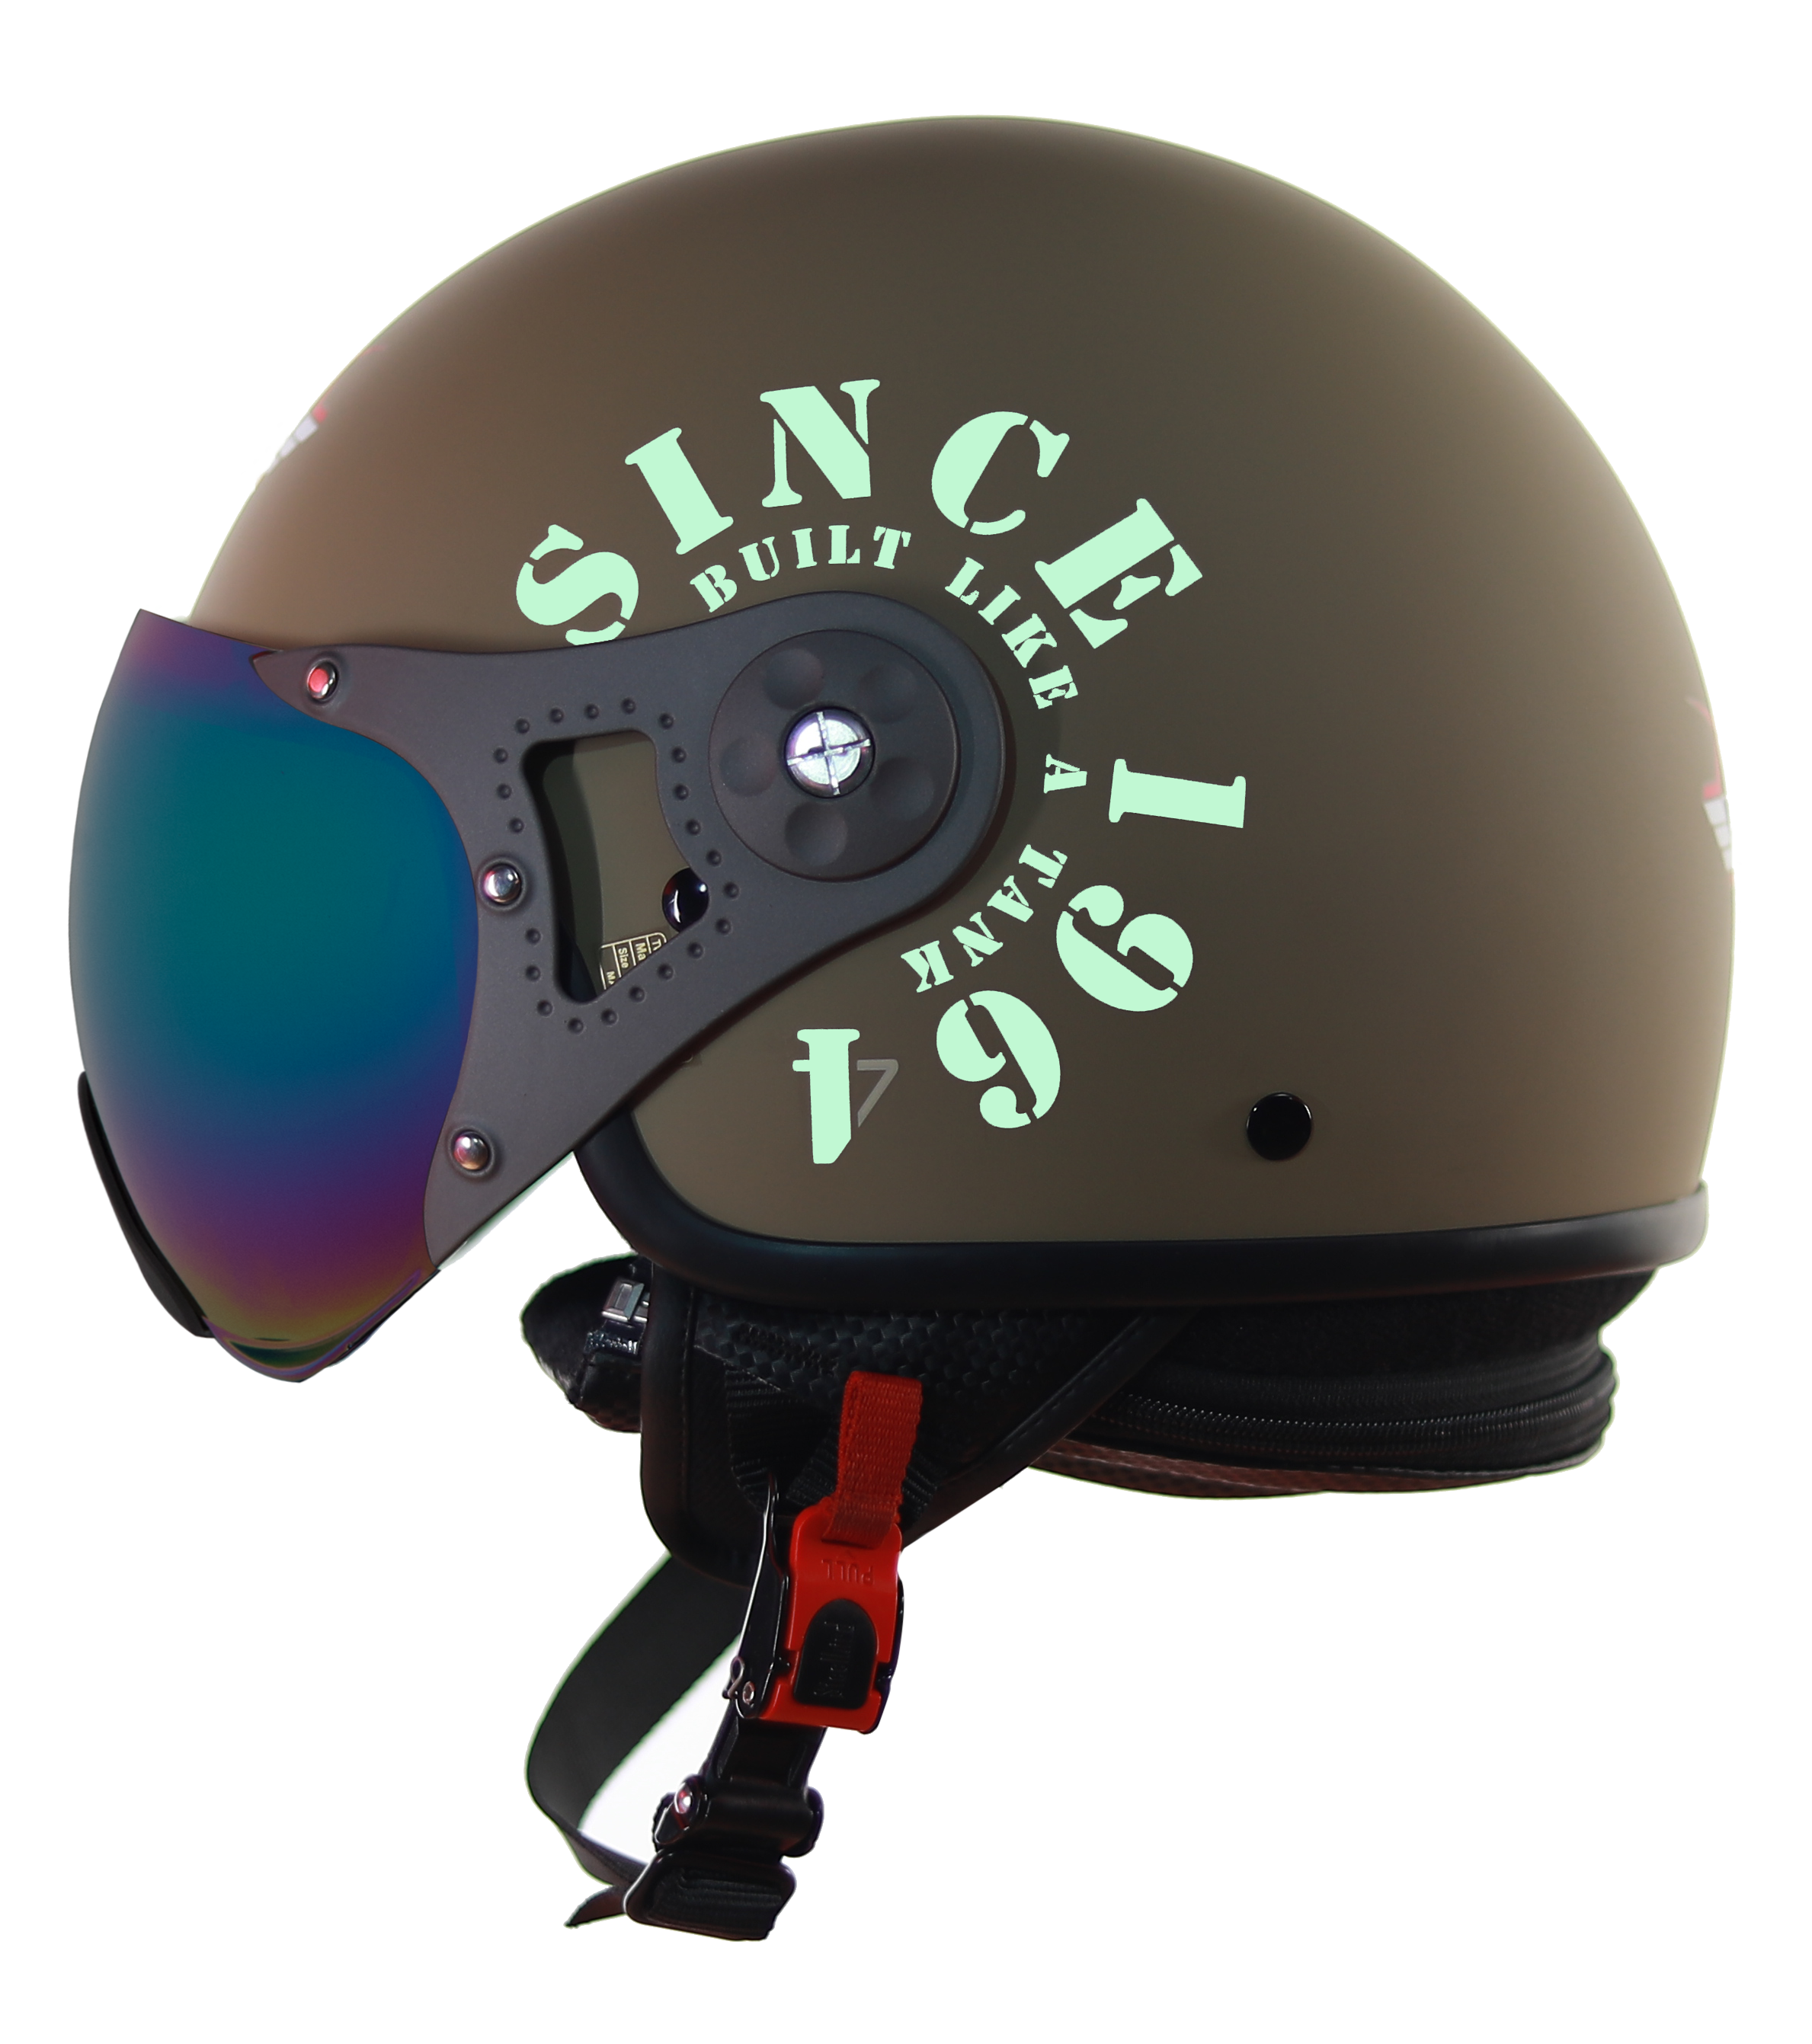 Steelbird SB-27 Tank ISI Certified Open Face Graphic Helmet (Matt Desert Storm Military Green With Chrome Rainbow Visor)